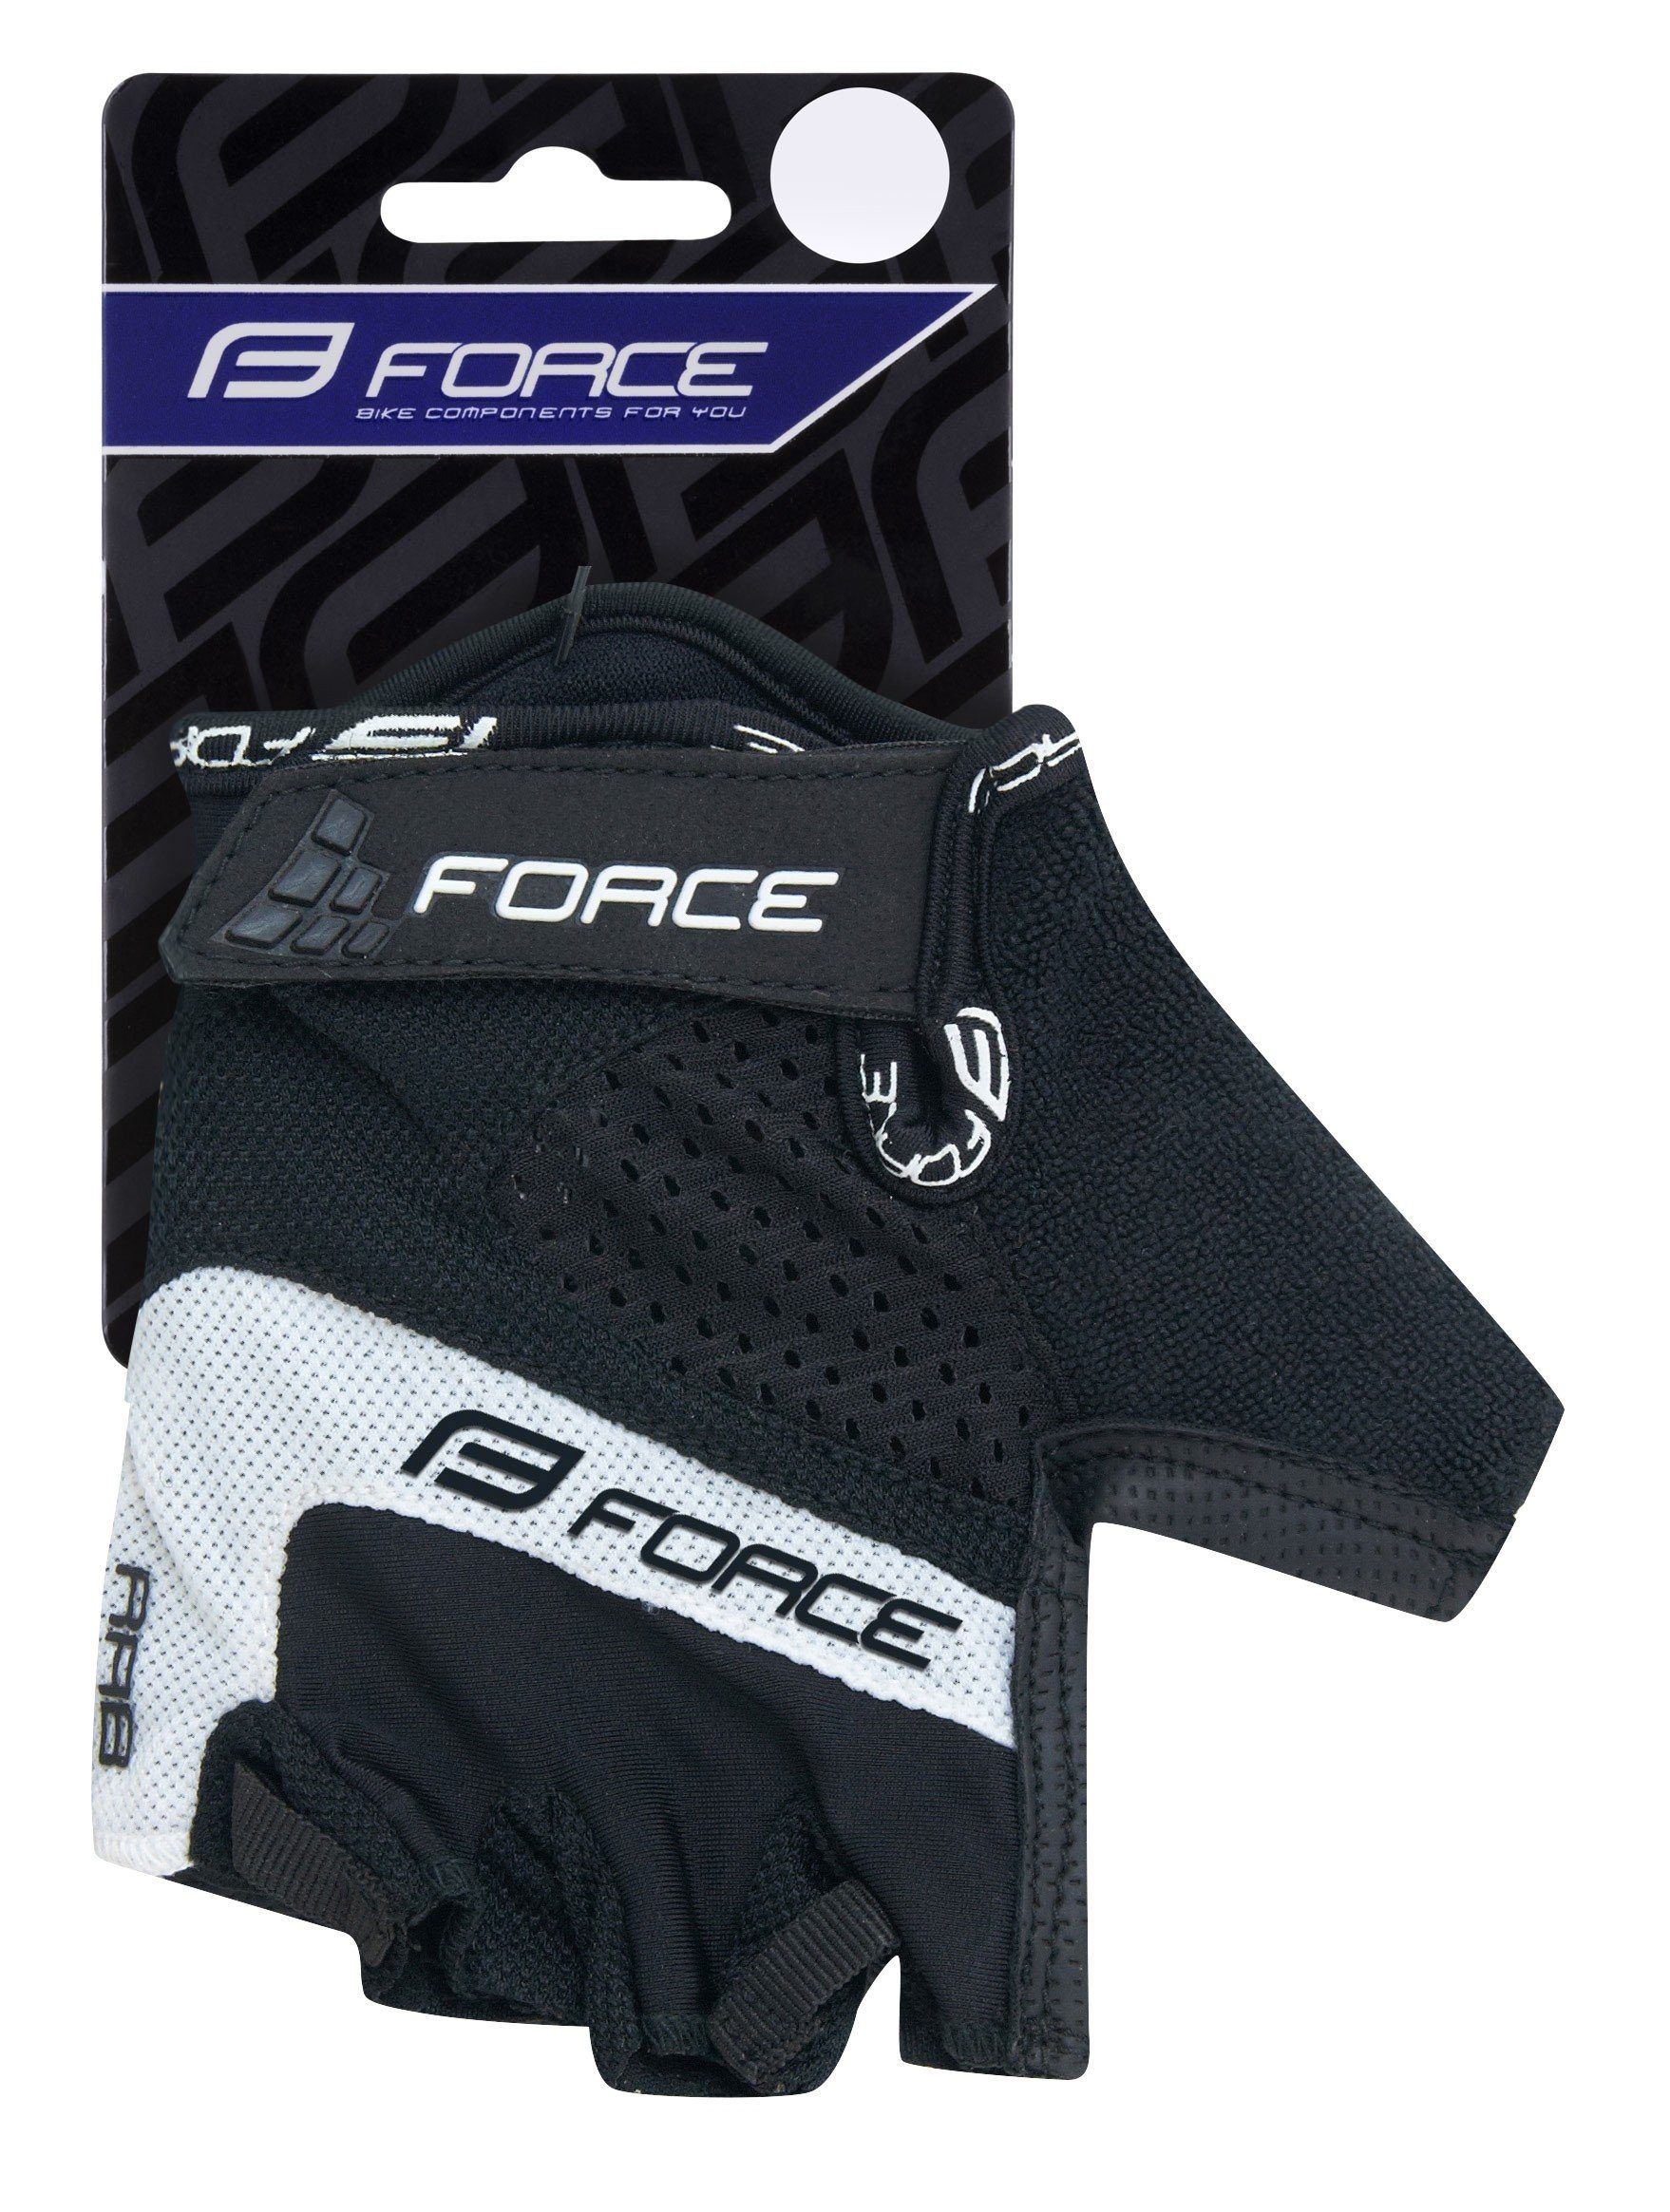 RAB FORCE FORCE Fahrradhandschuhe Handschuhe schwarz